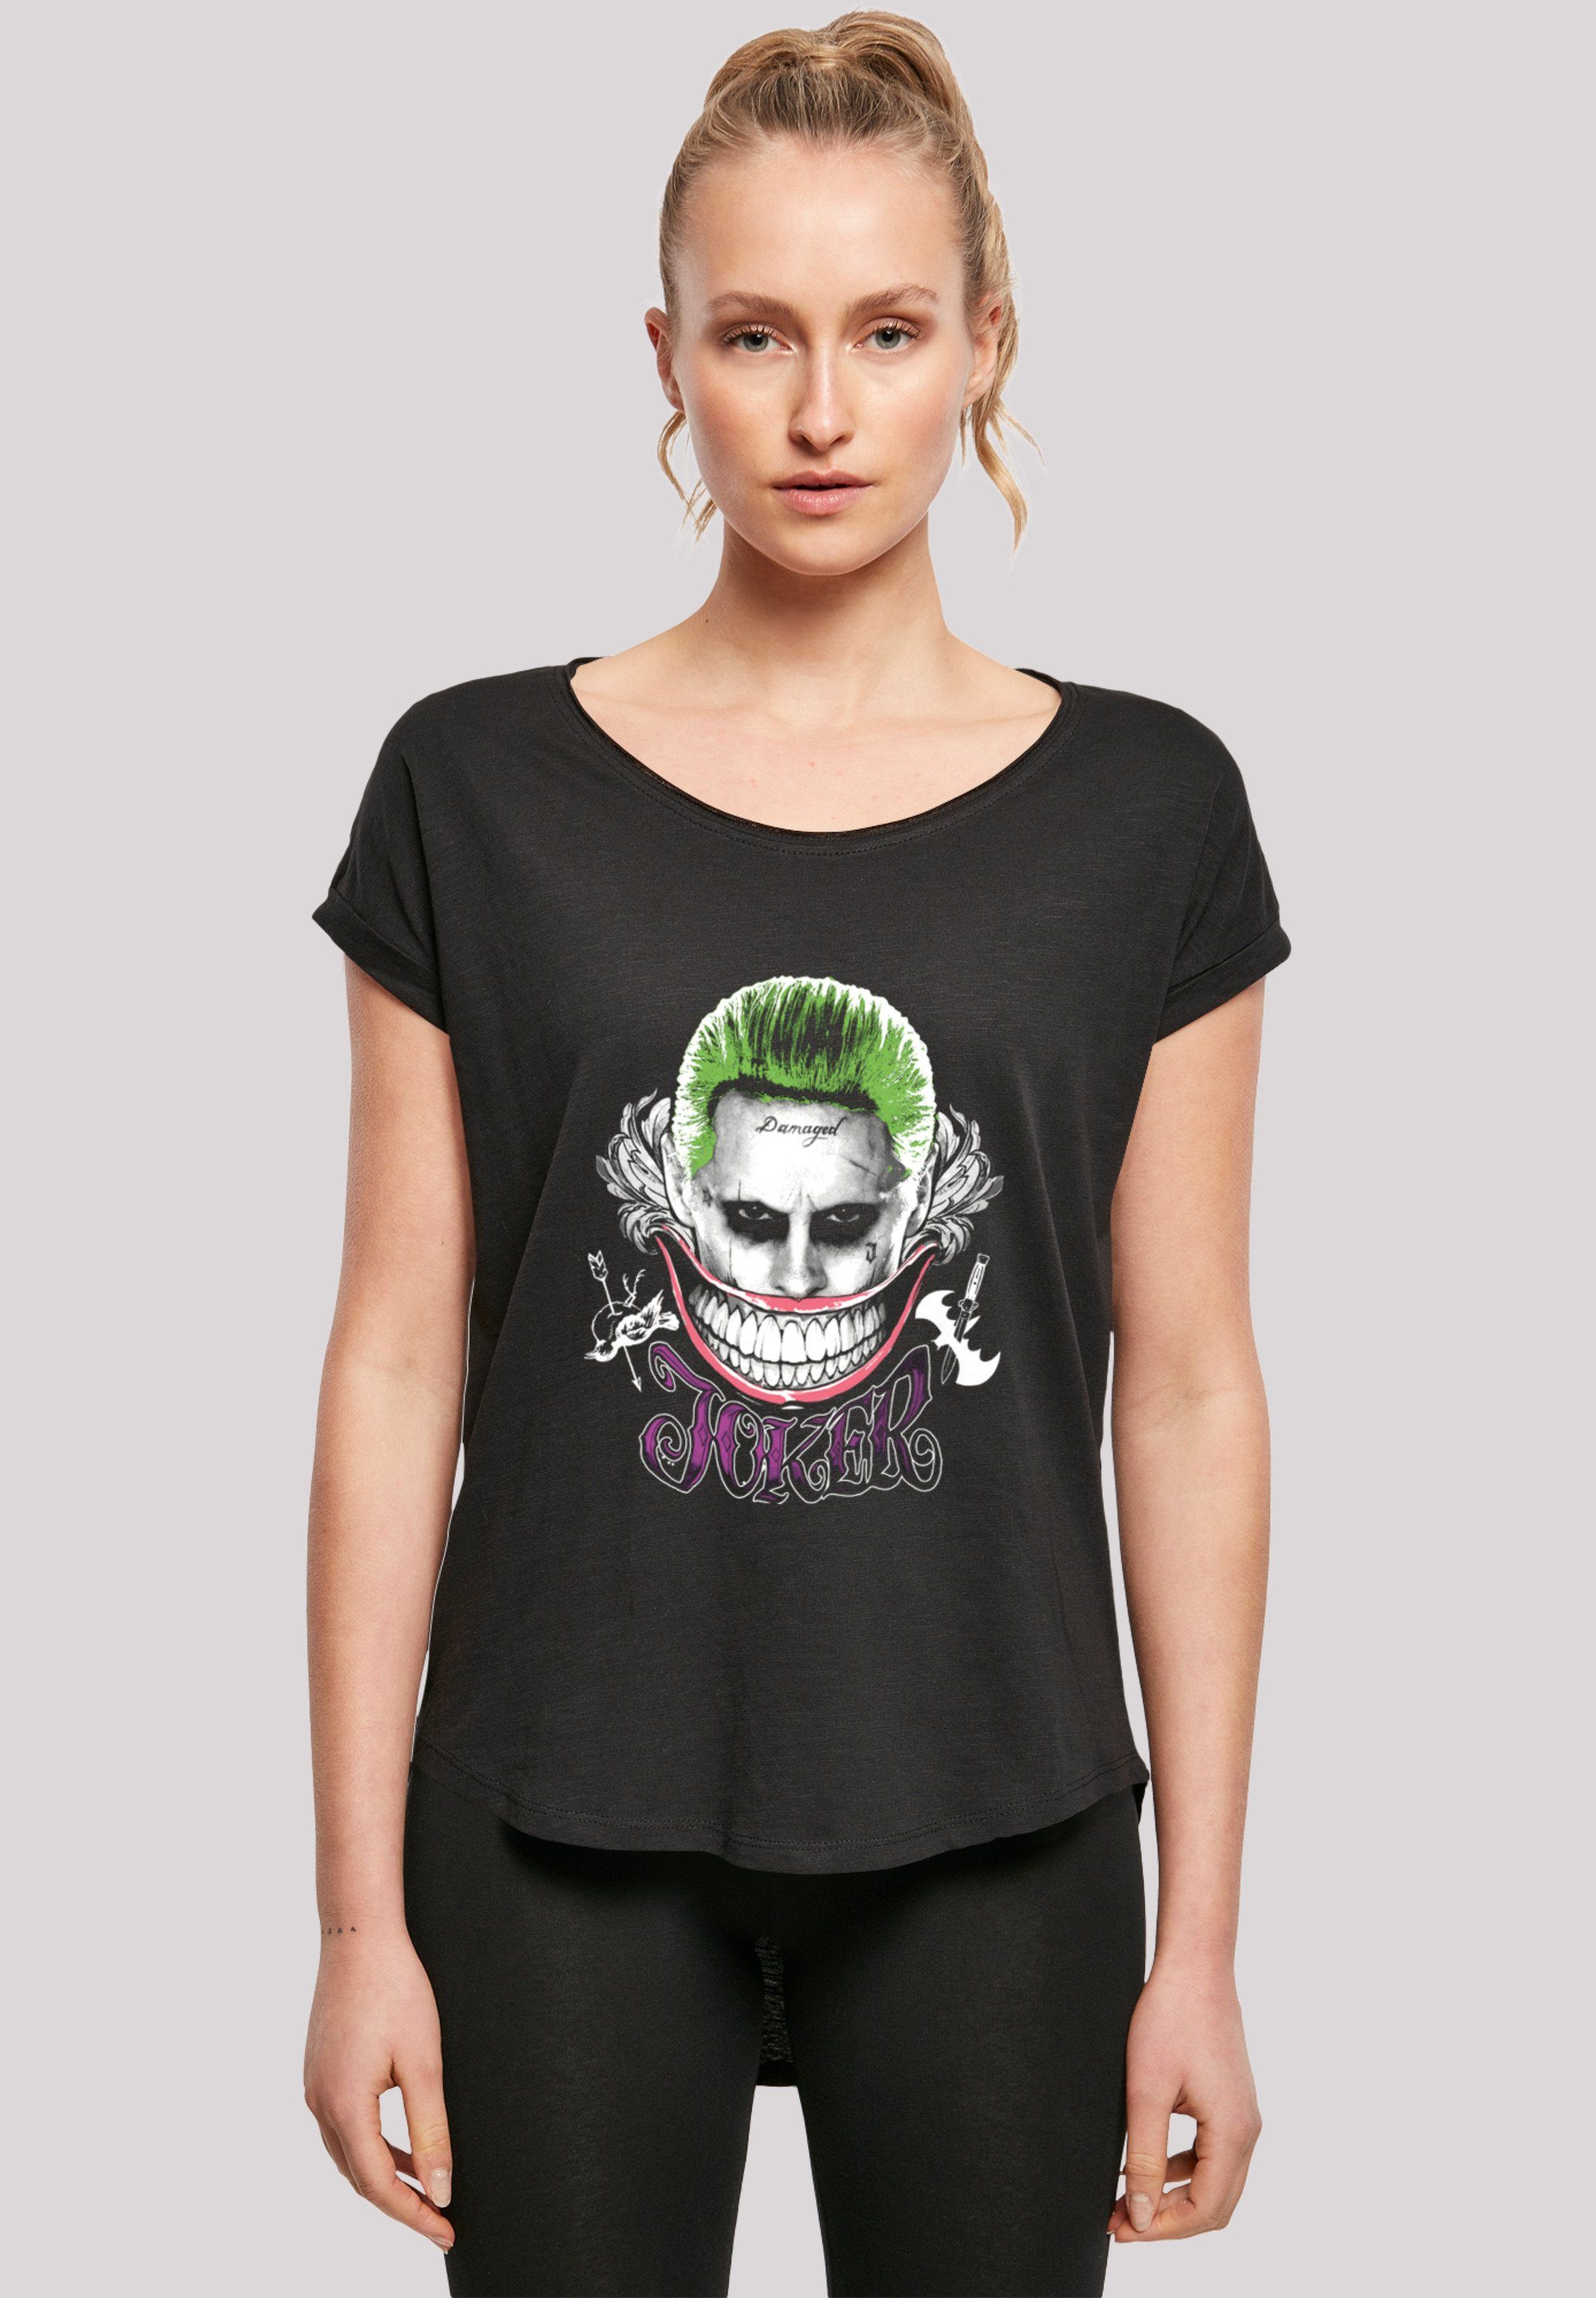 Coloured F4NT4STIC T-Shirt Squad Suicide Joker Print Smile